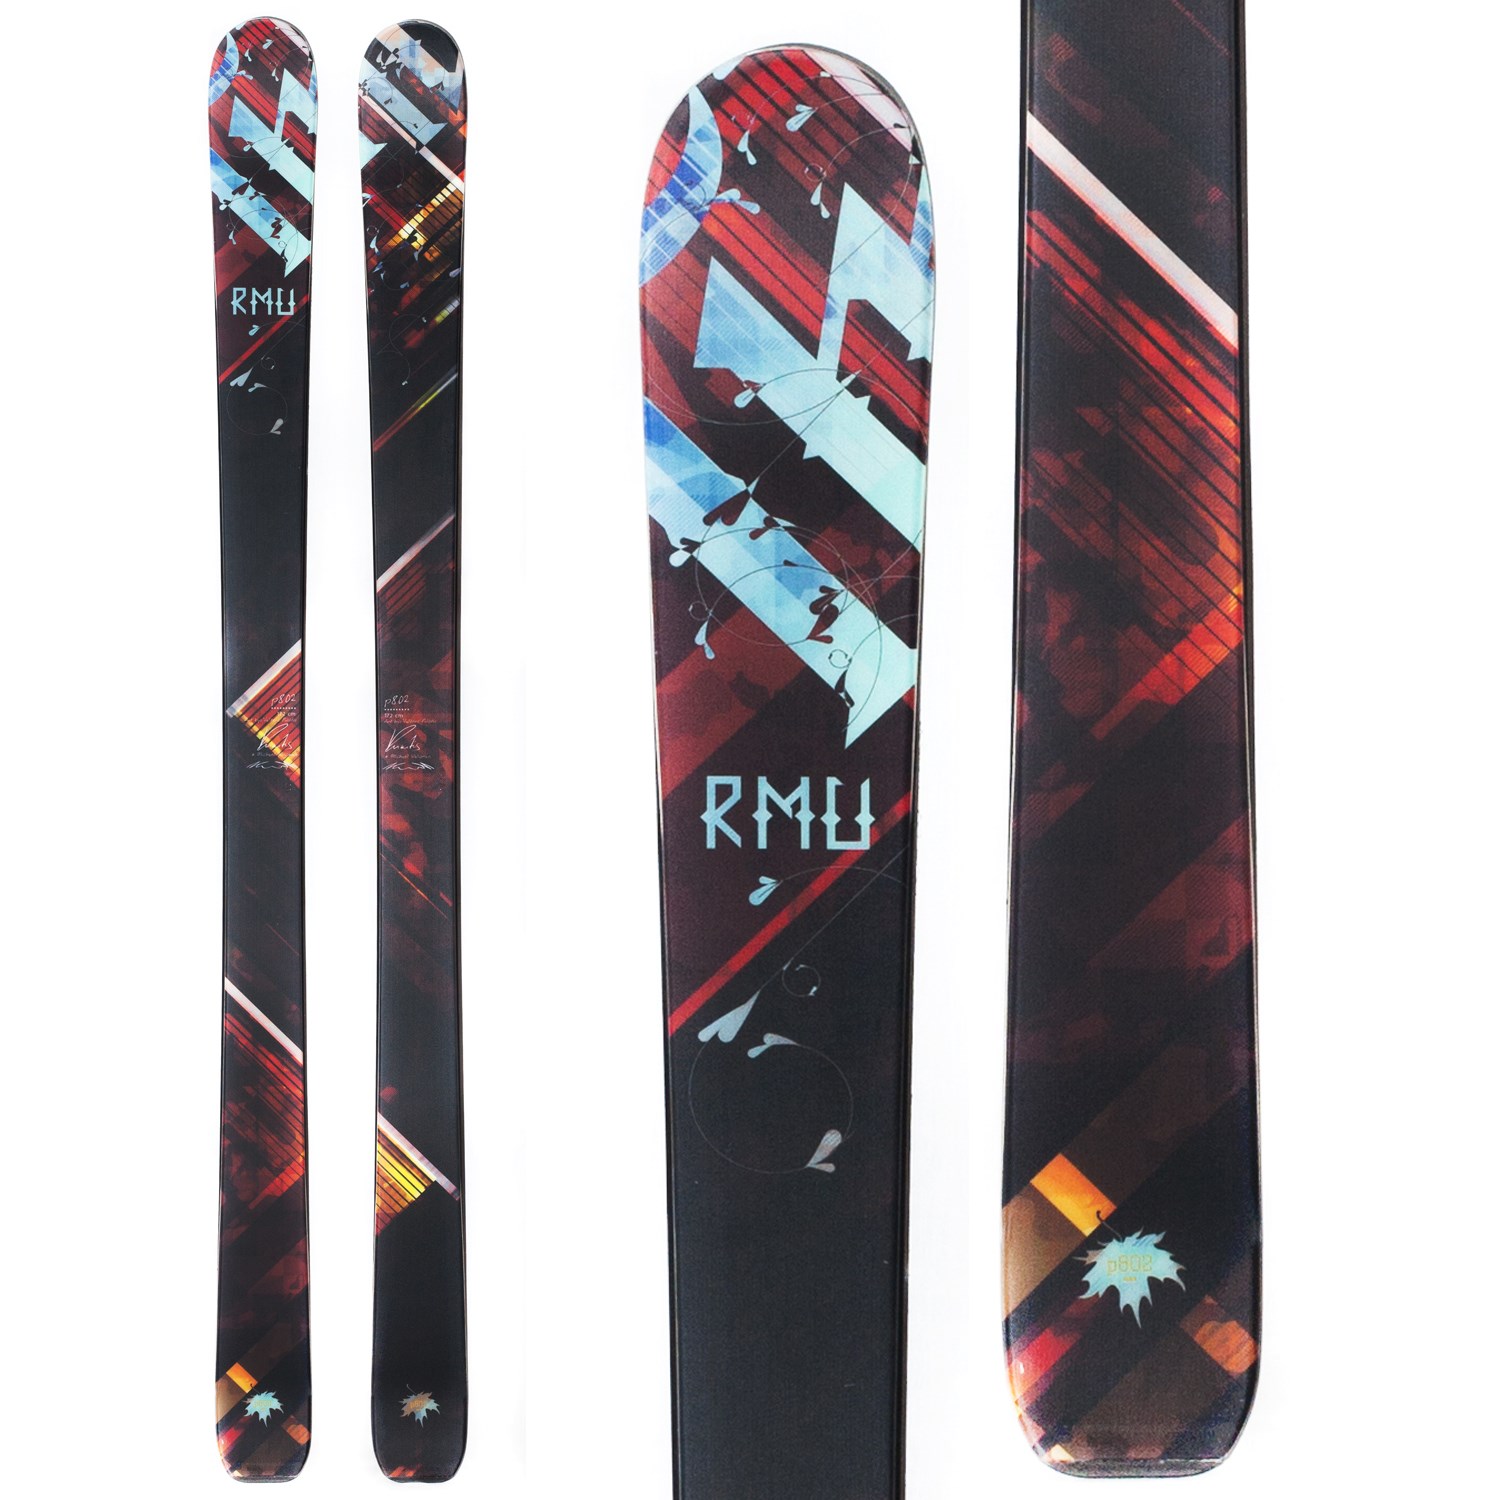 RMU p802 Skis 2015 | evo